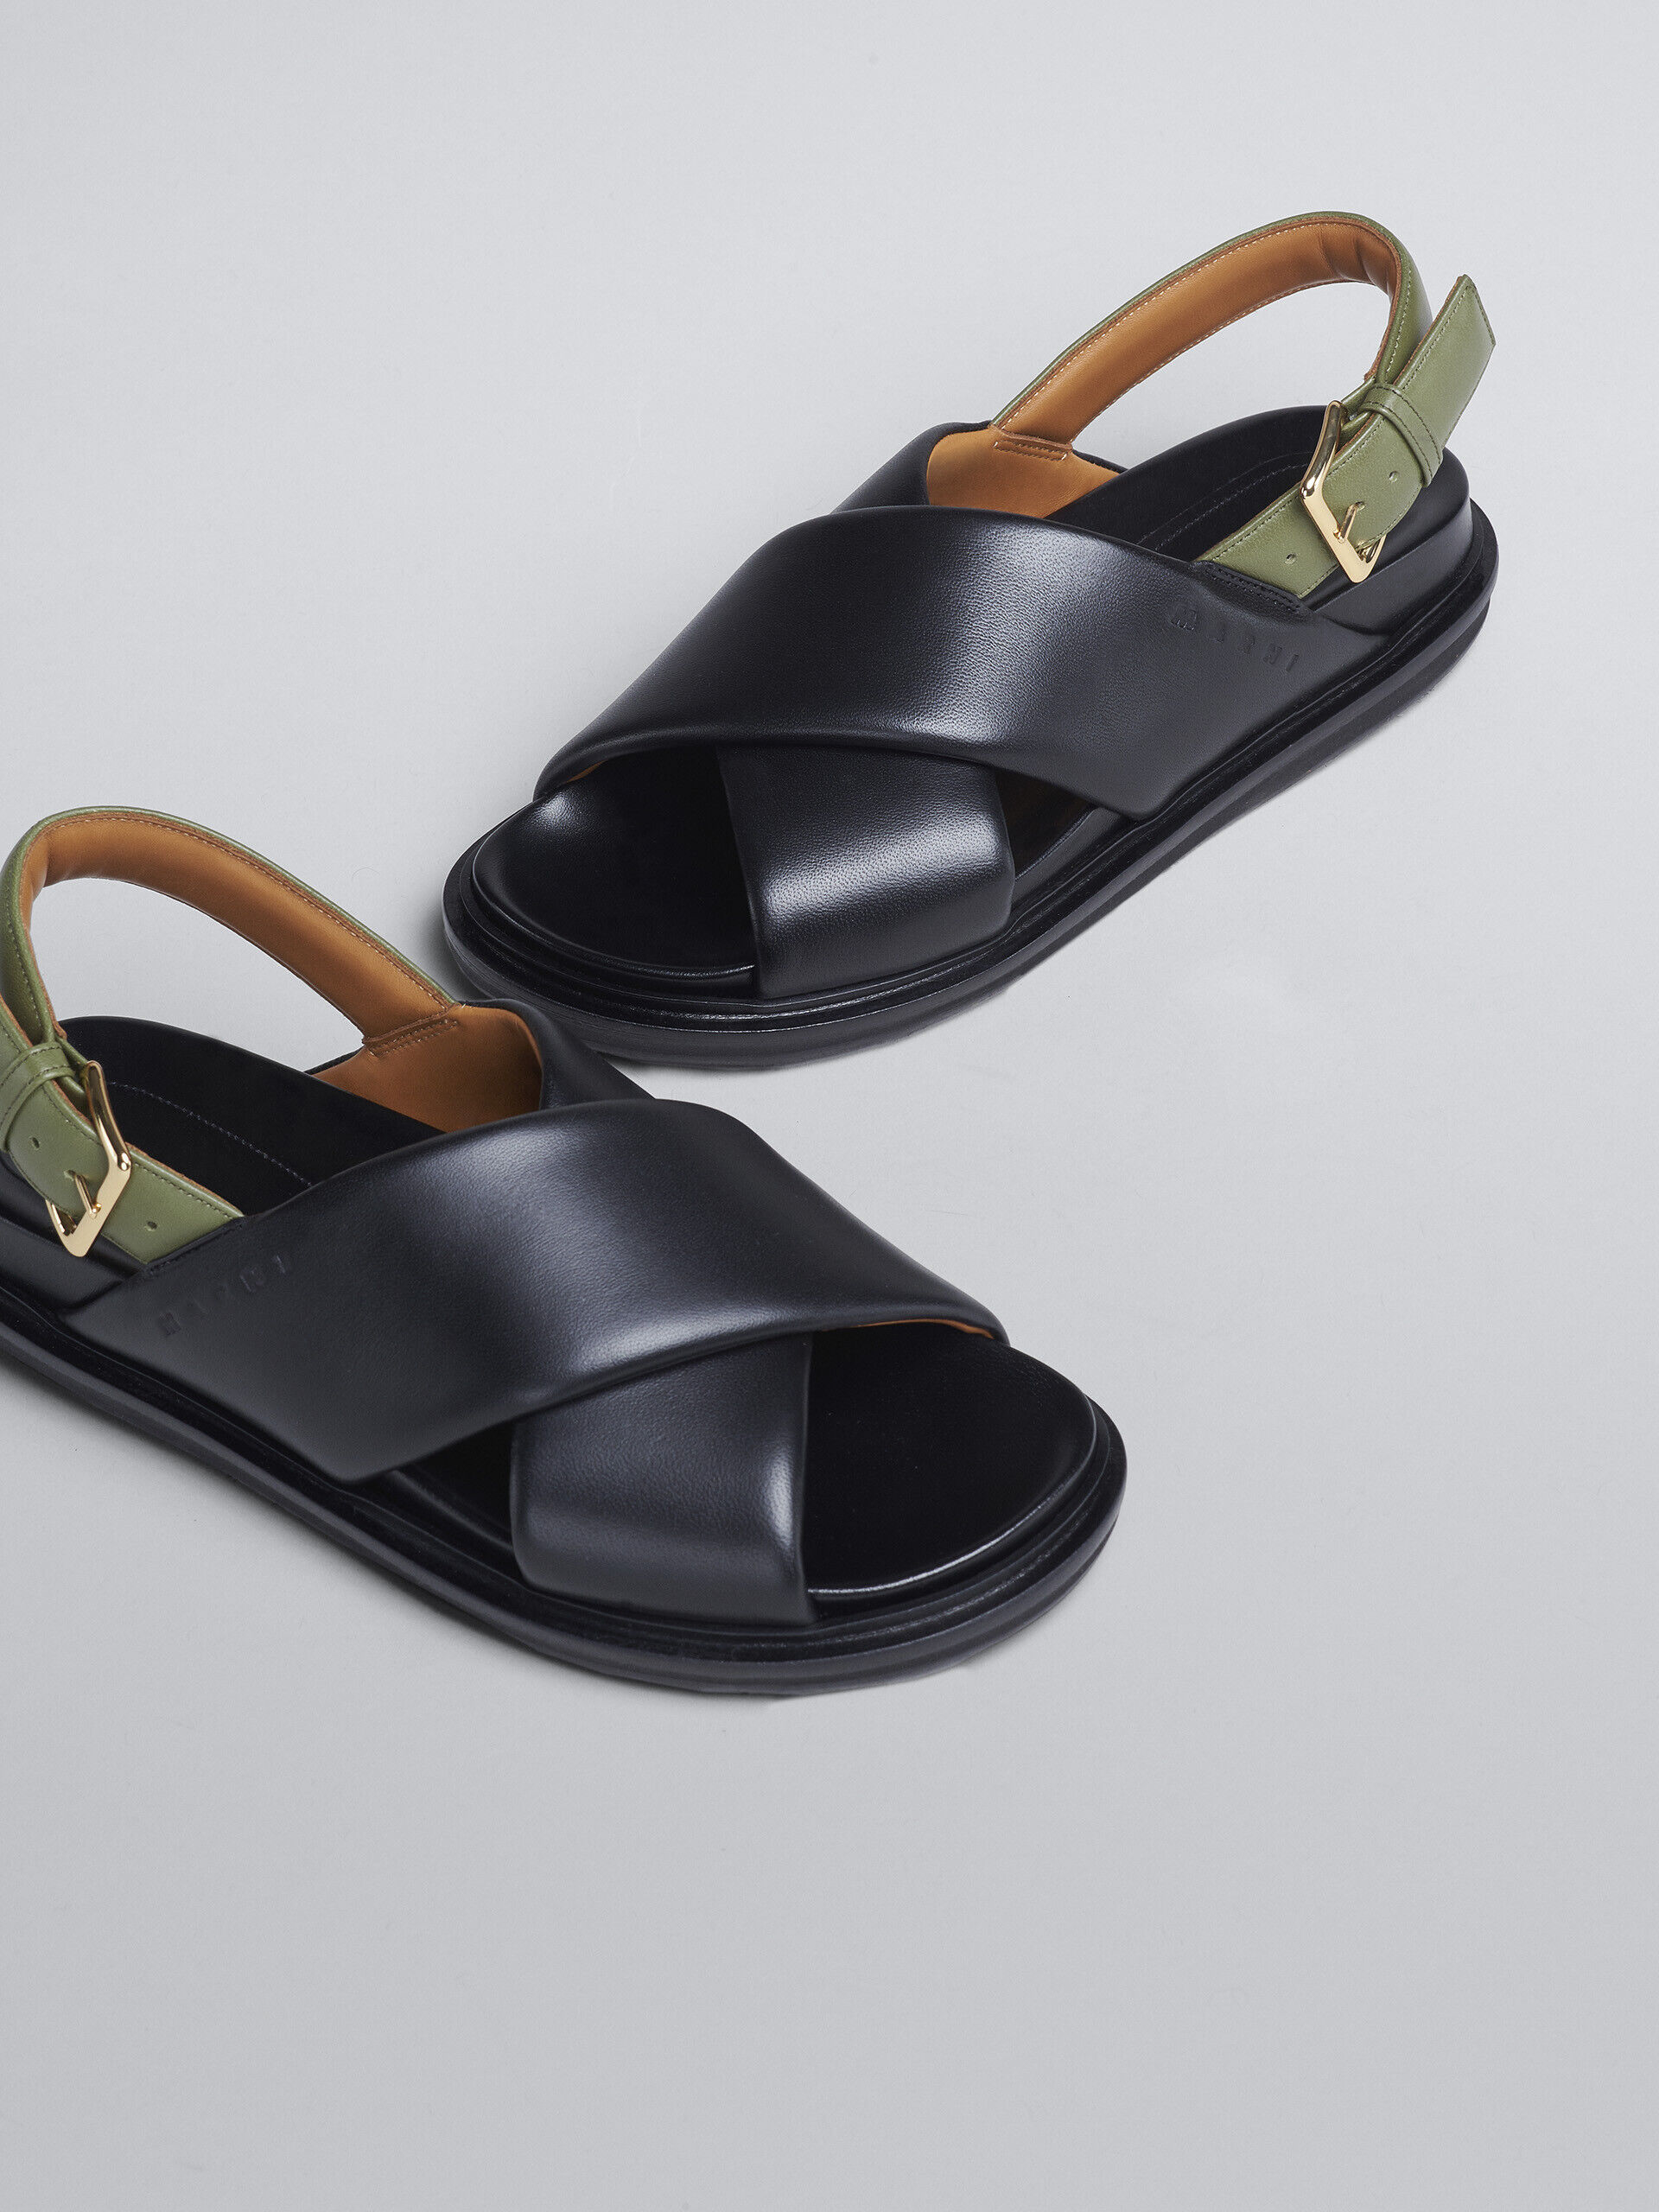 Marni 263176 Womens Fussbett Platform Sandals Black/Pink Size 39 M | eBay